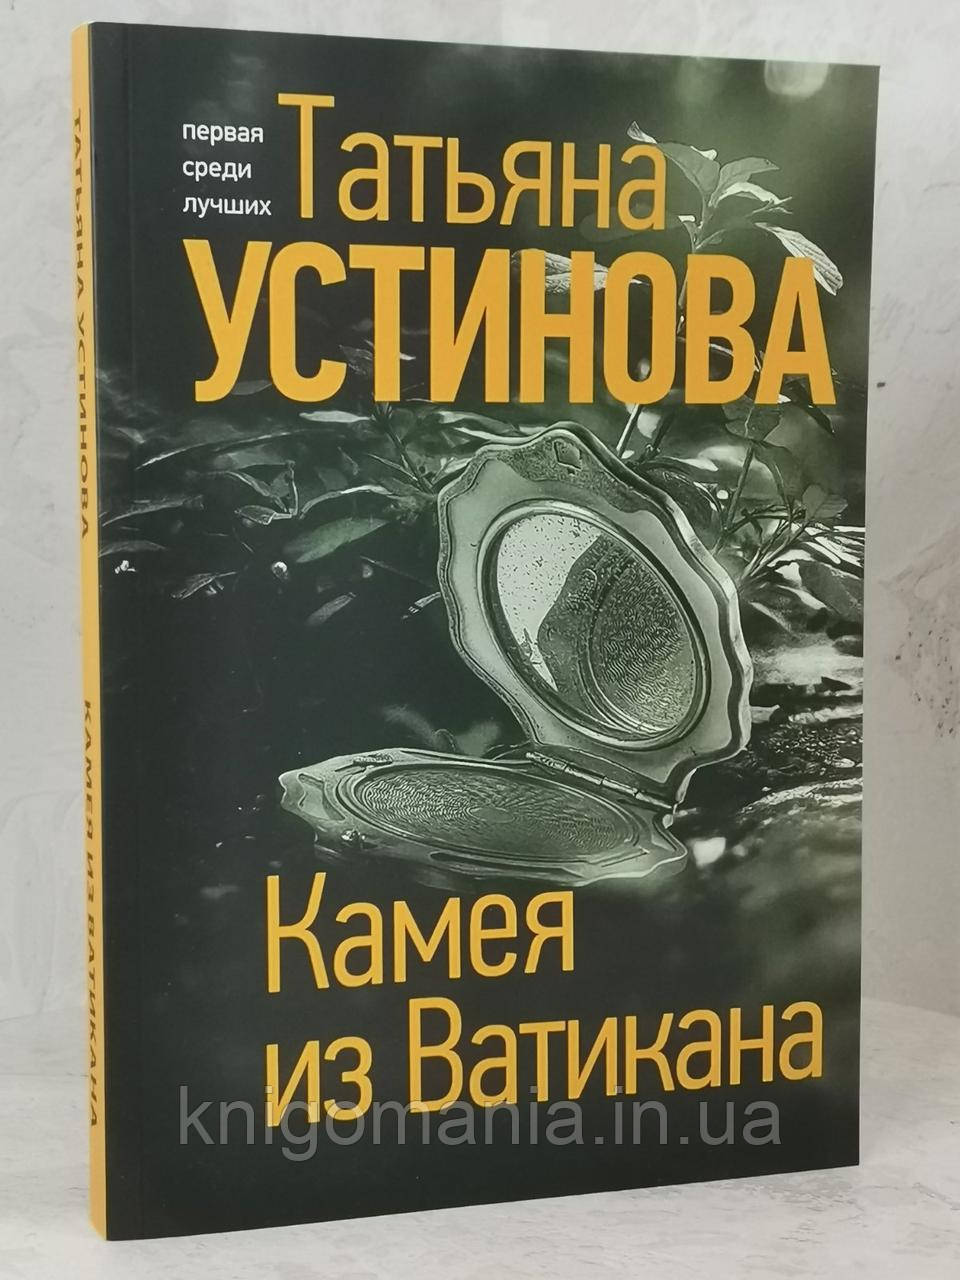 Книга "Камея из Ватикана" Татьяна Устинова